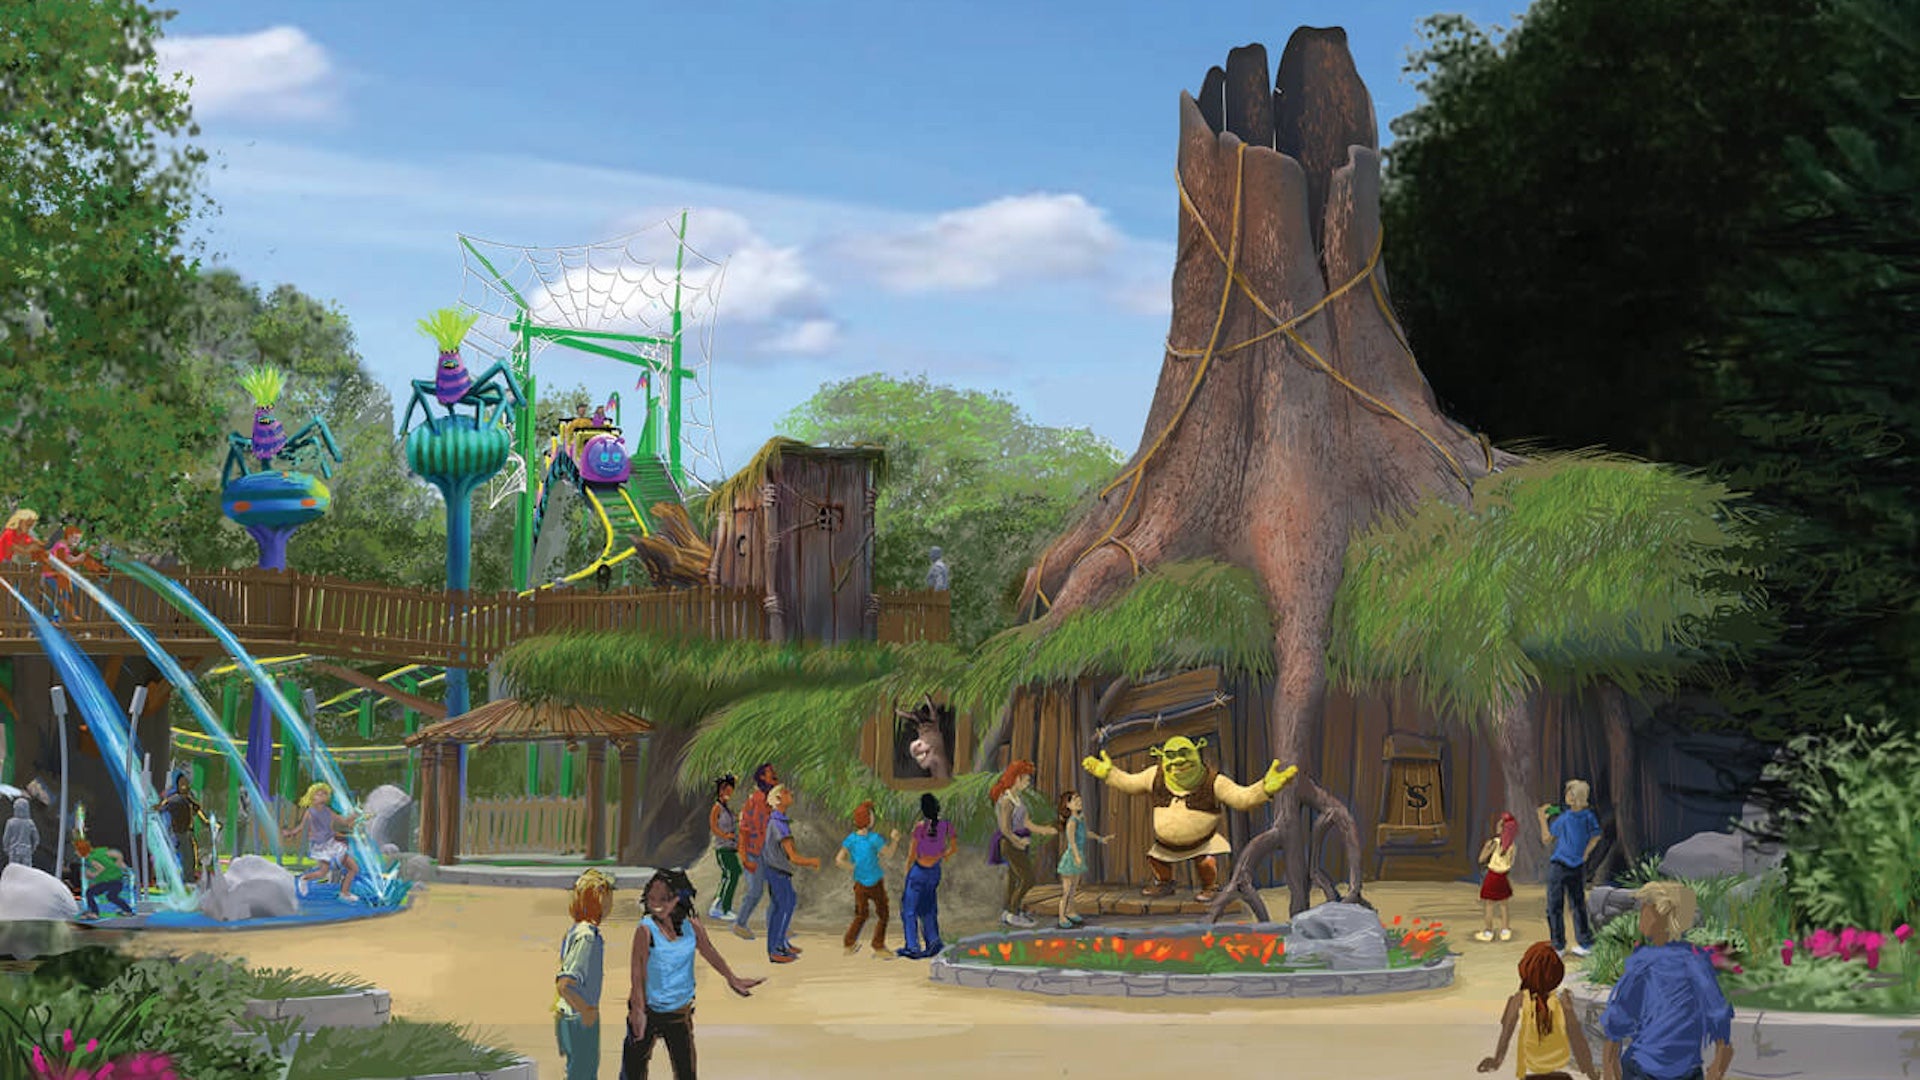 Artist rendering of Shrek's Swamp at Dreamworks at Universal Orlando